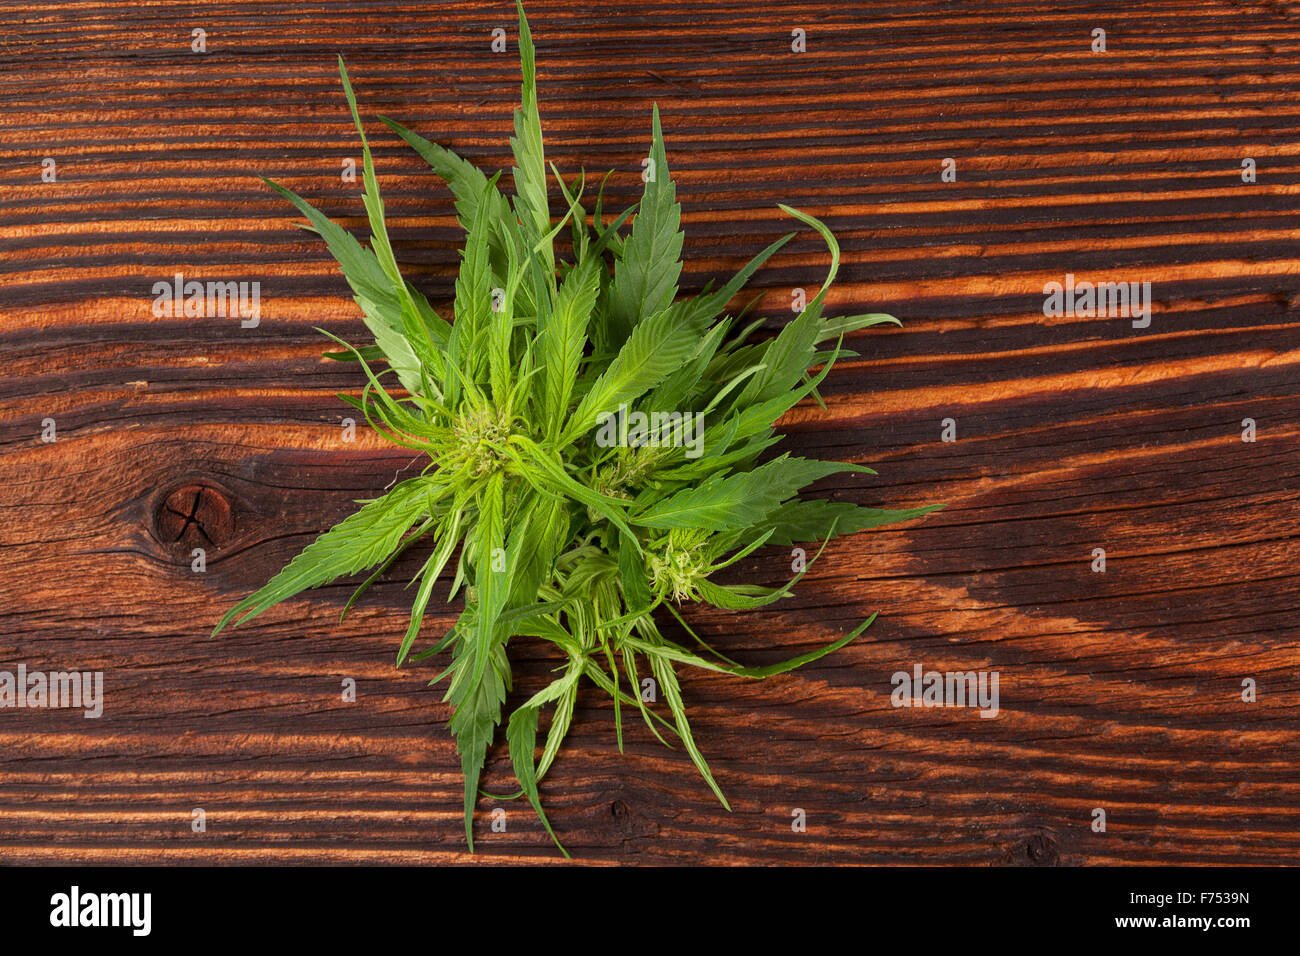 Cannabis buds and foliage on brown wooden table. Medical marijuana, alternative medicine. Stock Photo